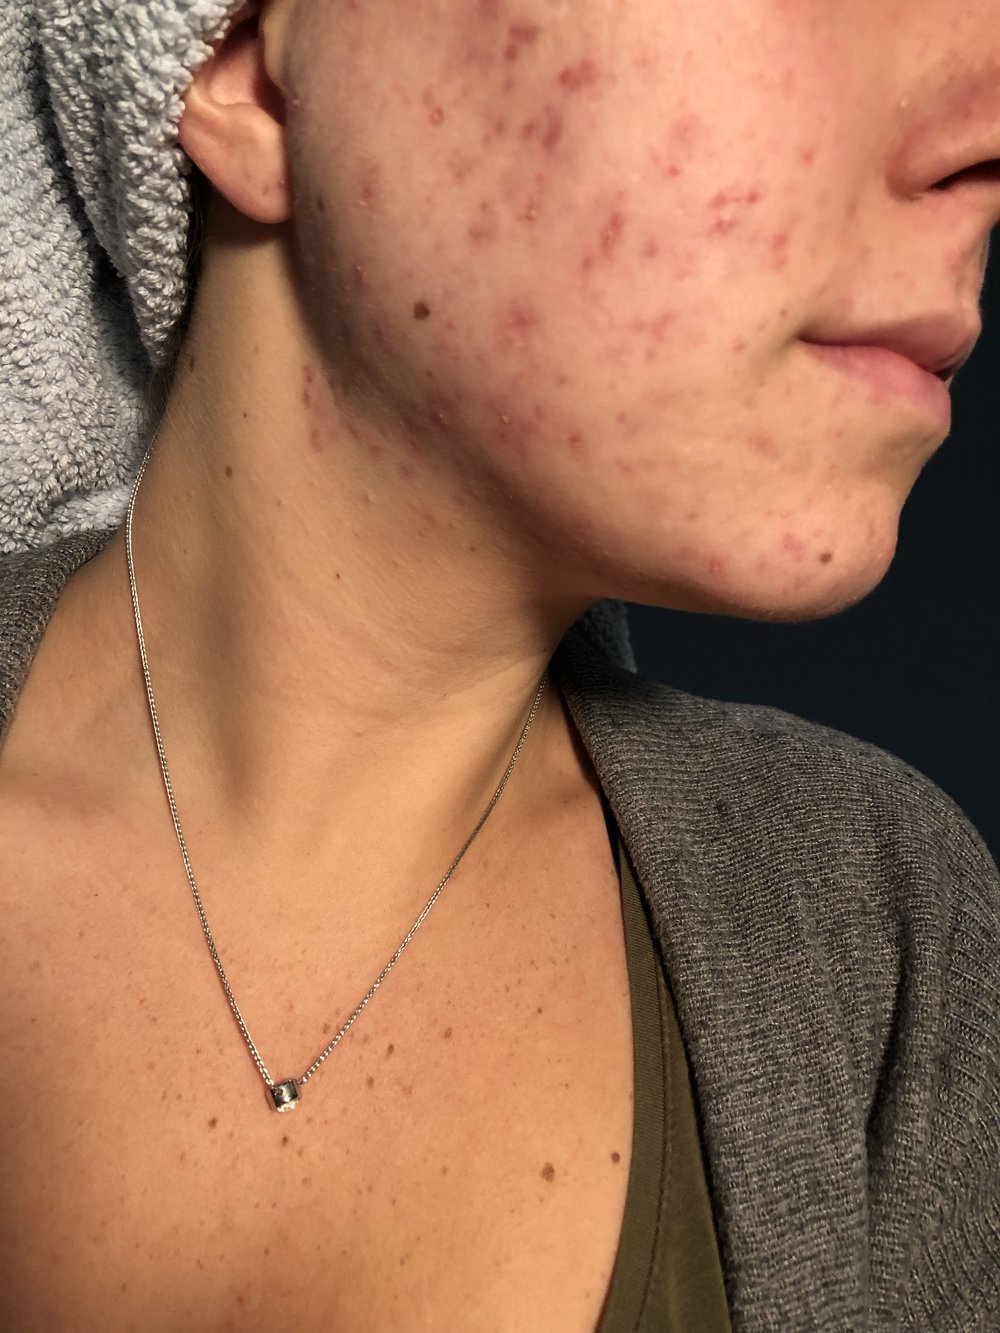 acne before.jpg